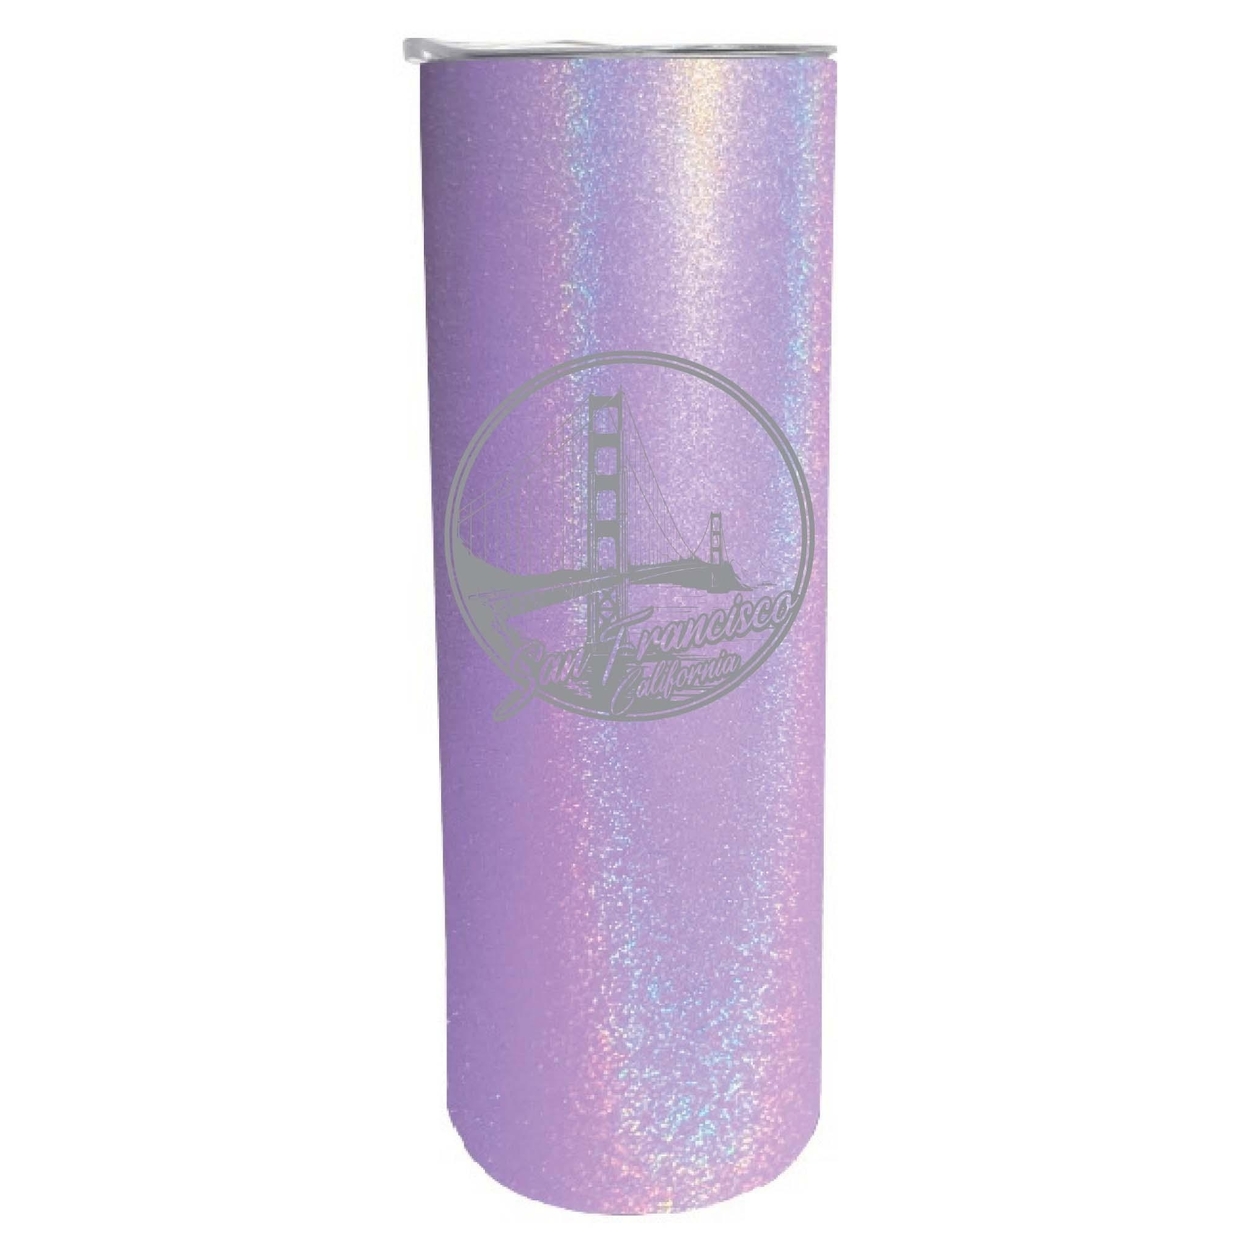 San Francisco California Souvenir 20 Oz Engraved Insulated Skinny Tumbler - Purple Glitter,,Single Unit